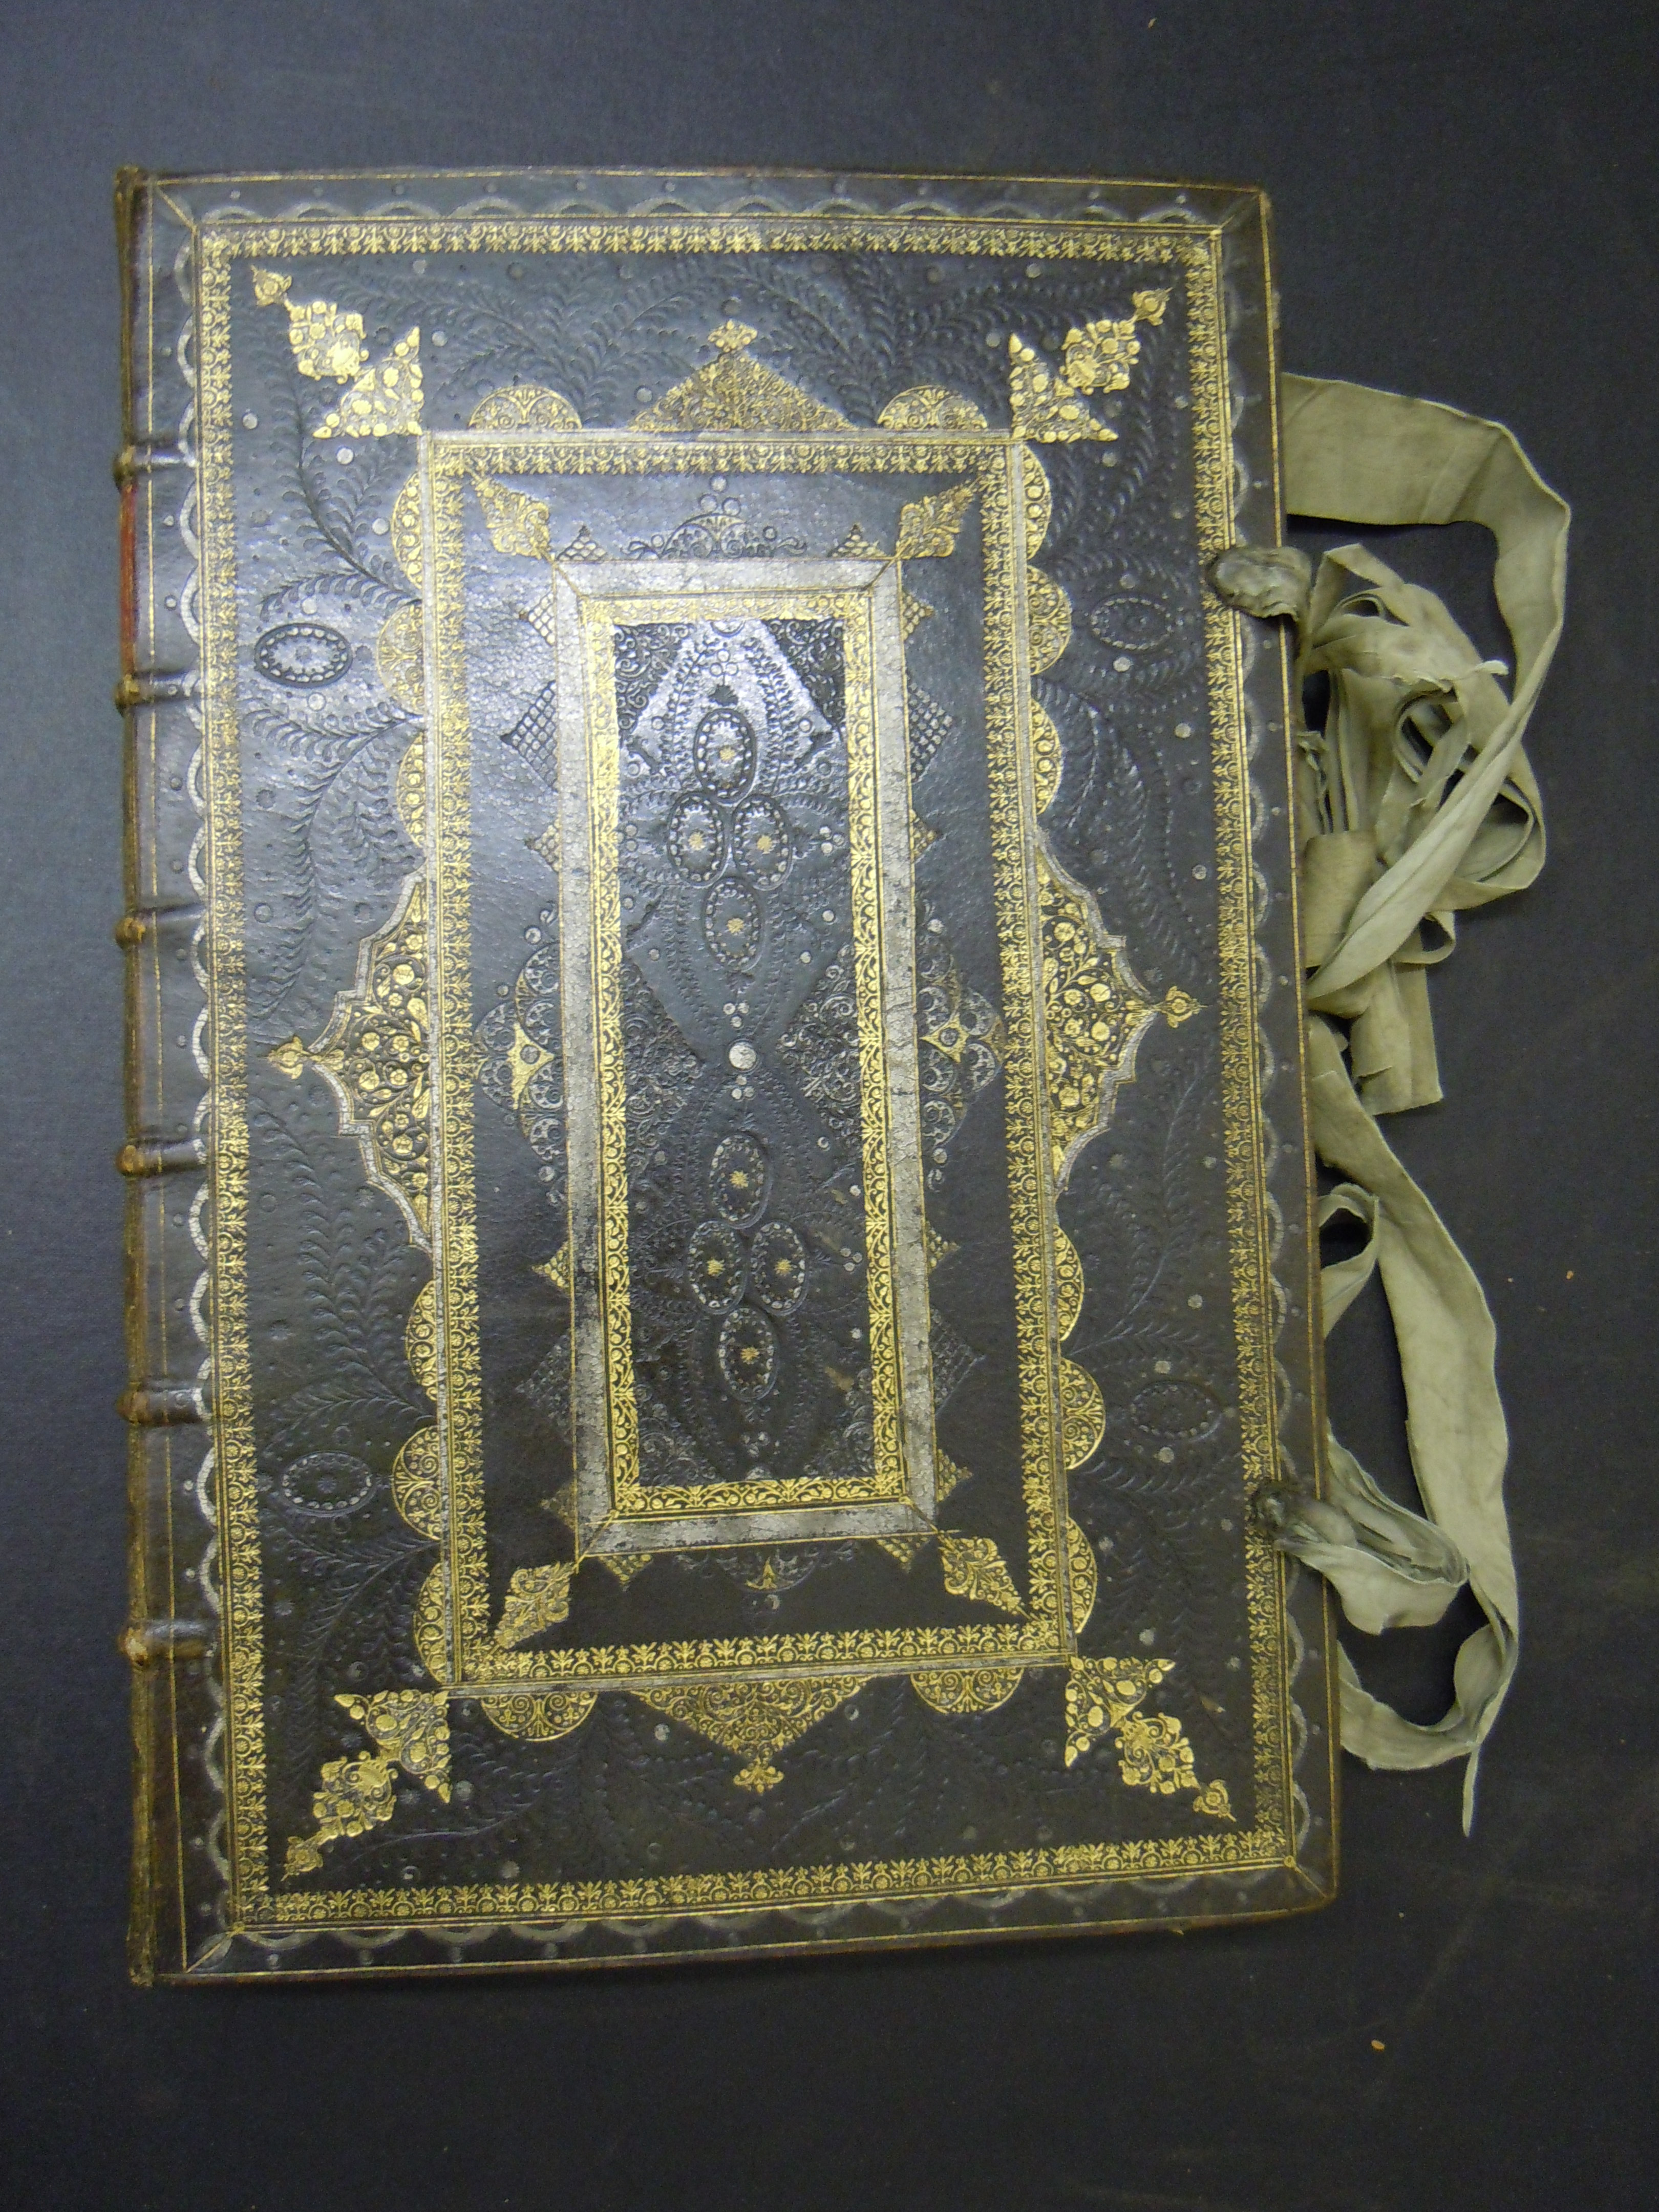 BT1.112.8, binding, The Book of Common Prayer (1669)